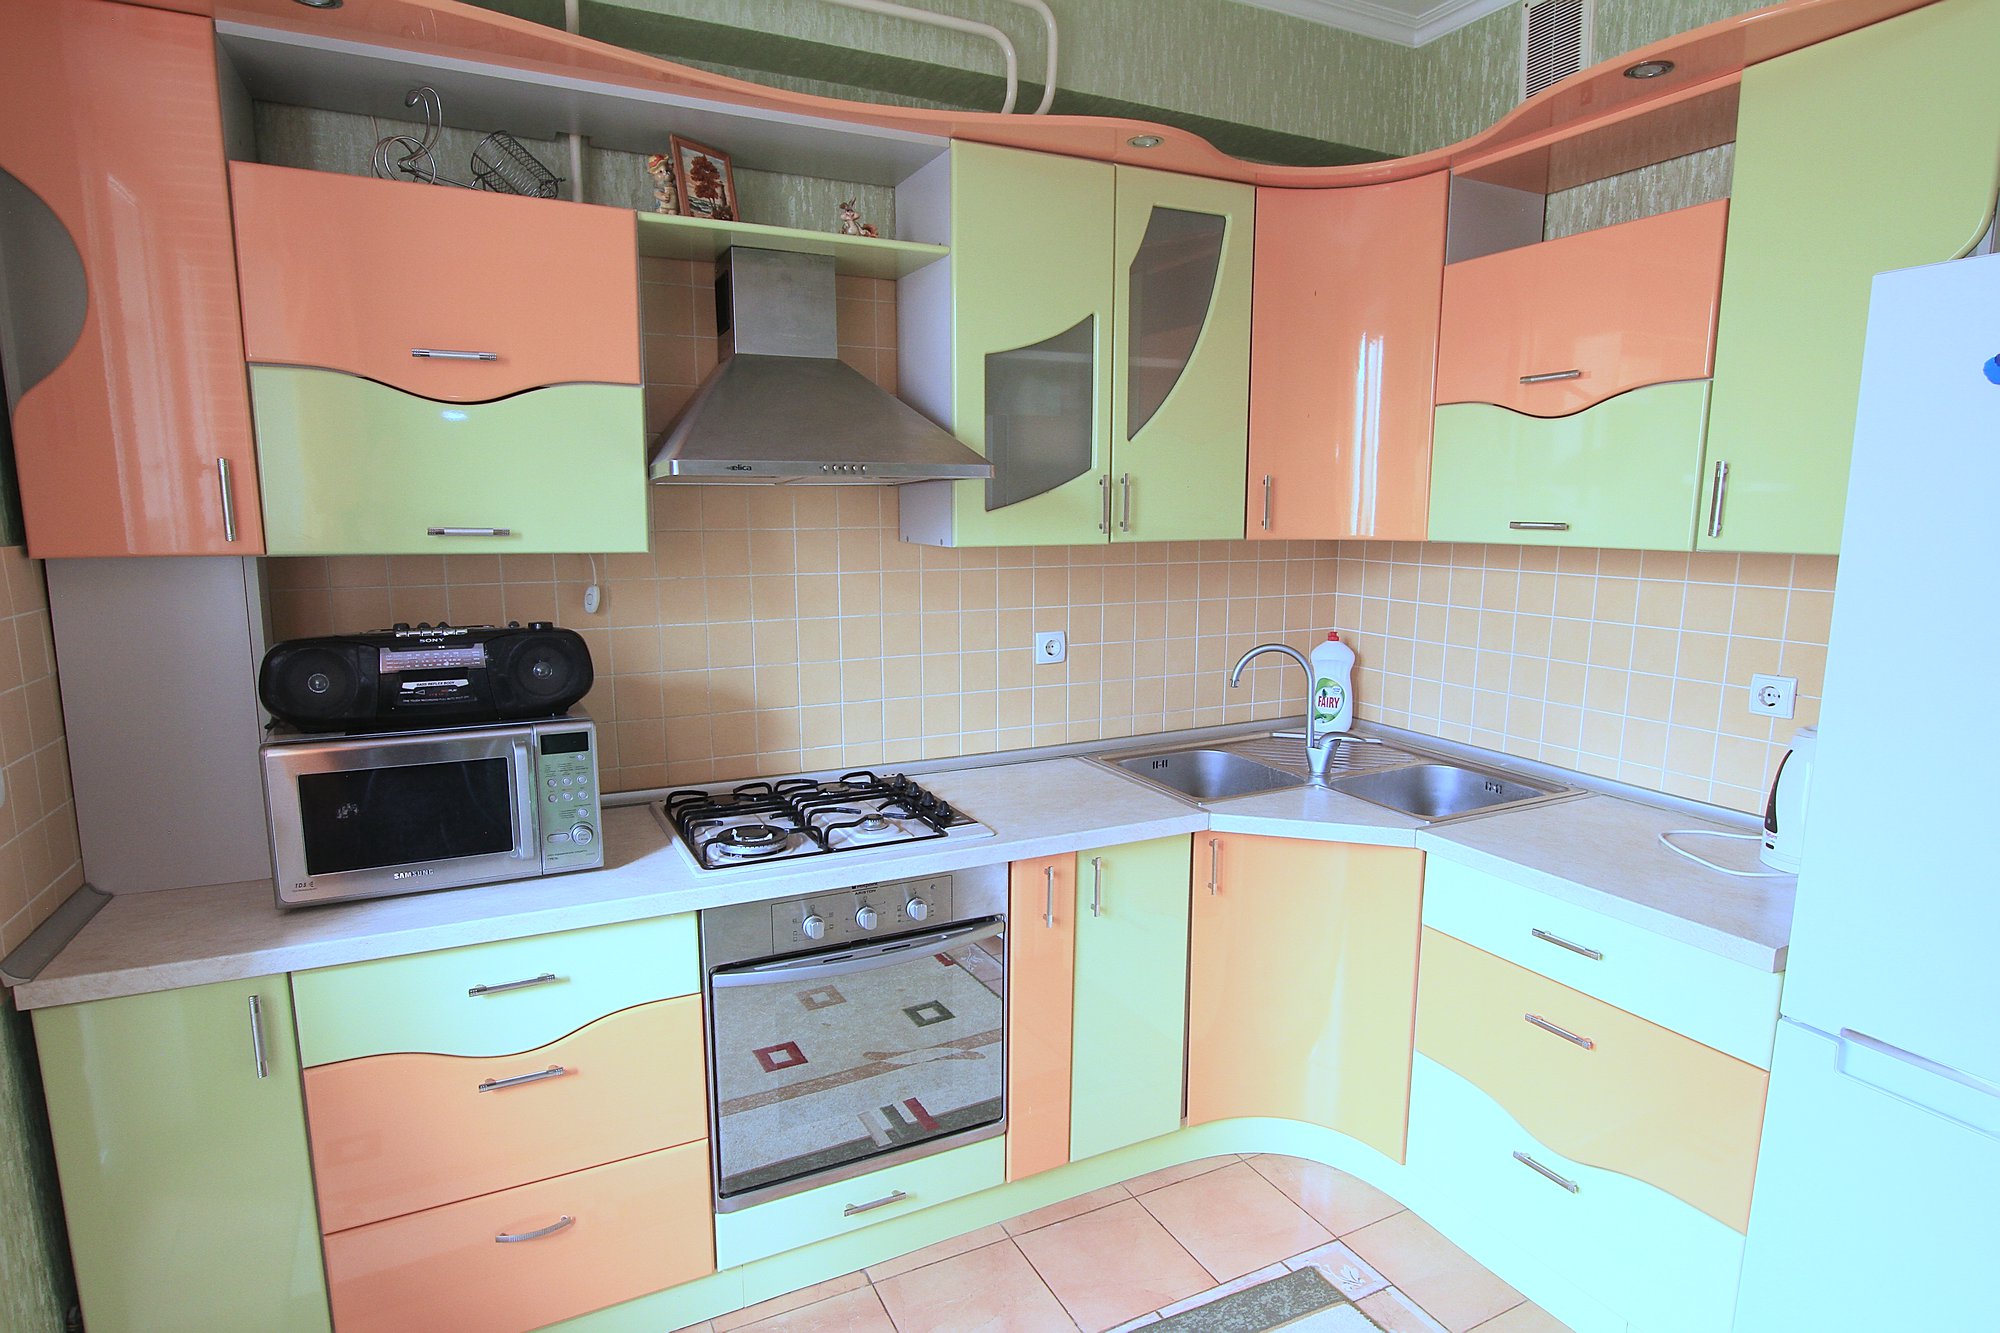 Anestiade Studio ist ein 1 Zimmer Apartment zur Miete in Chisinau, Moldova